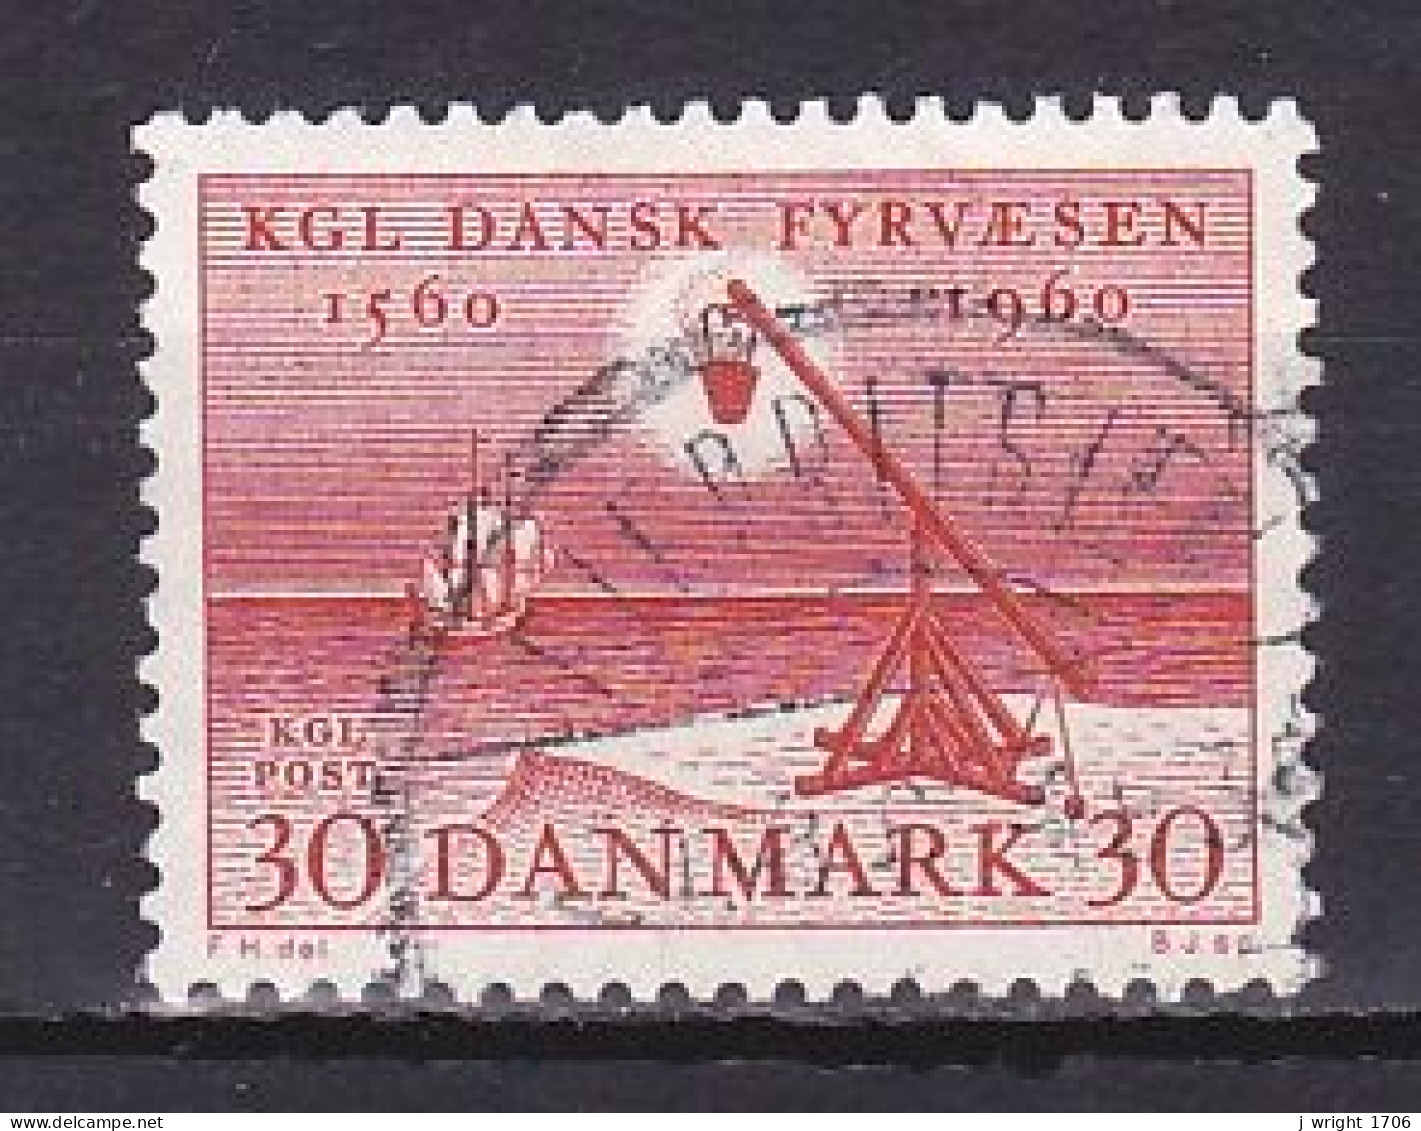 Denmark, 1960, Lighthouse Service 400th Anniv, 30ø, USED - Usati